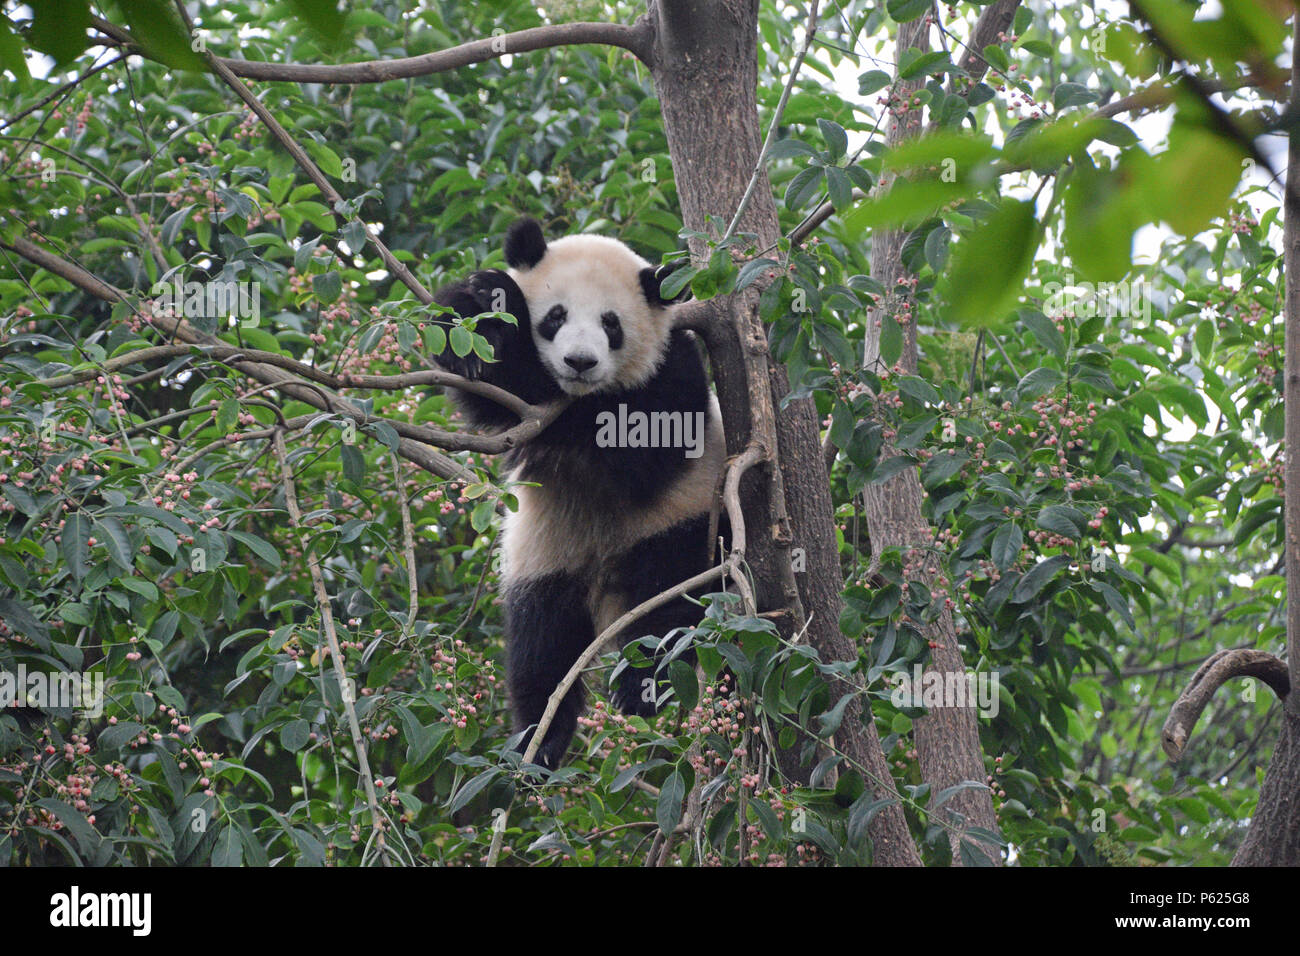 Panda hanging in a tree Stock Photo - Alamy